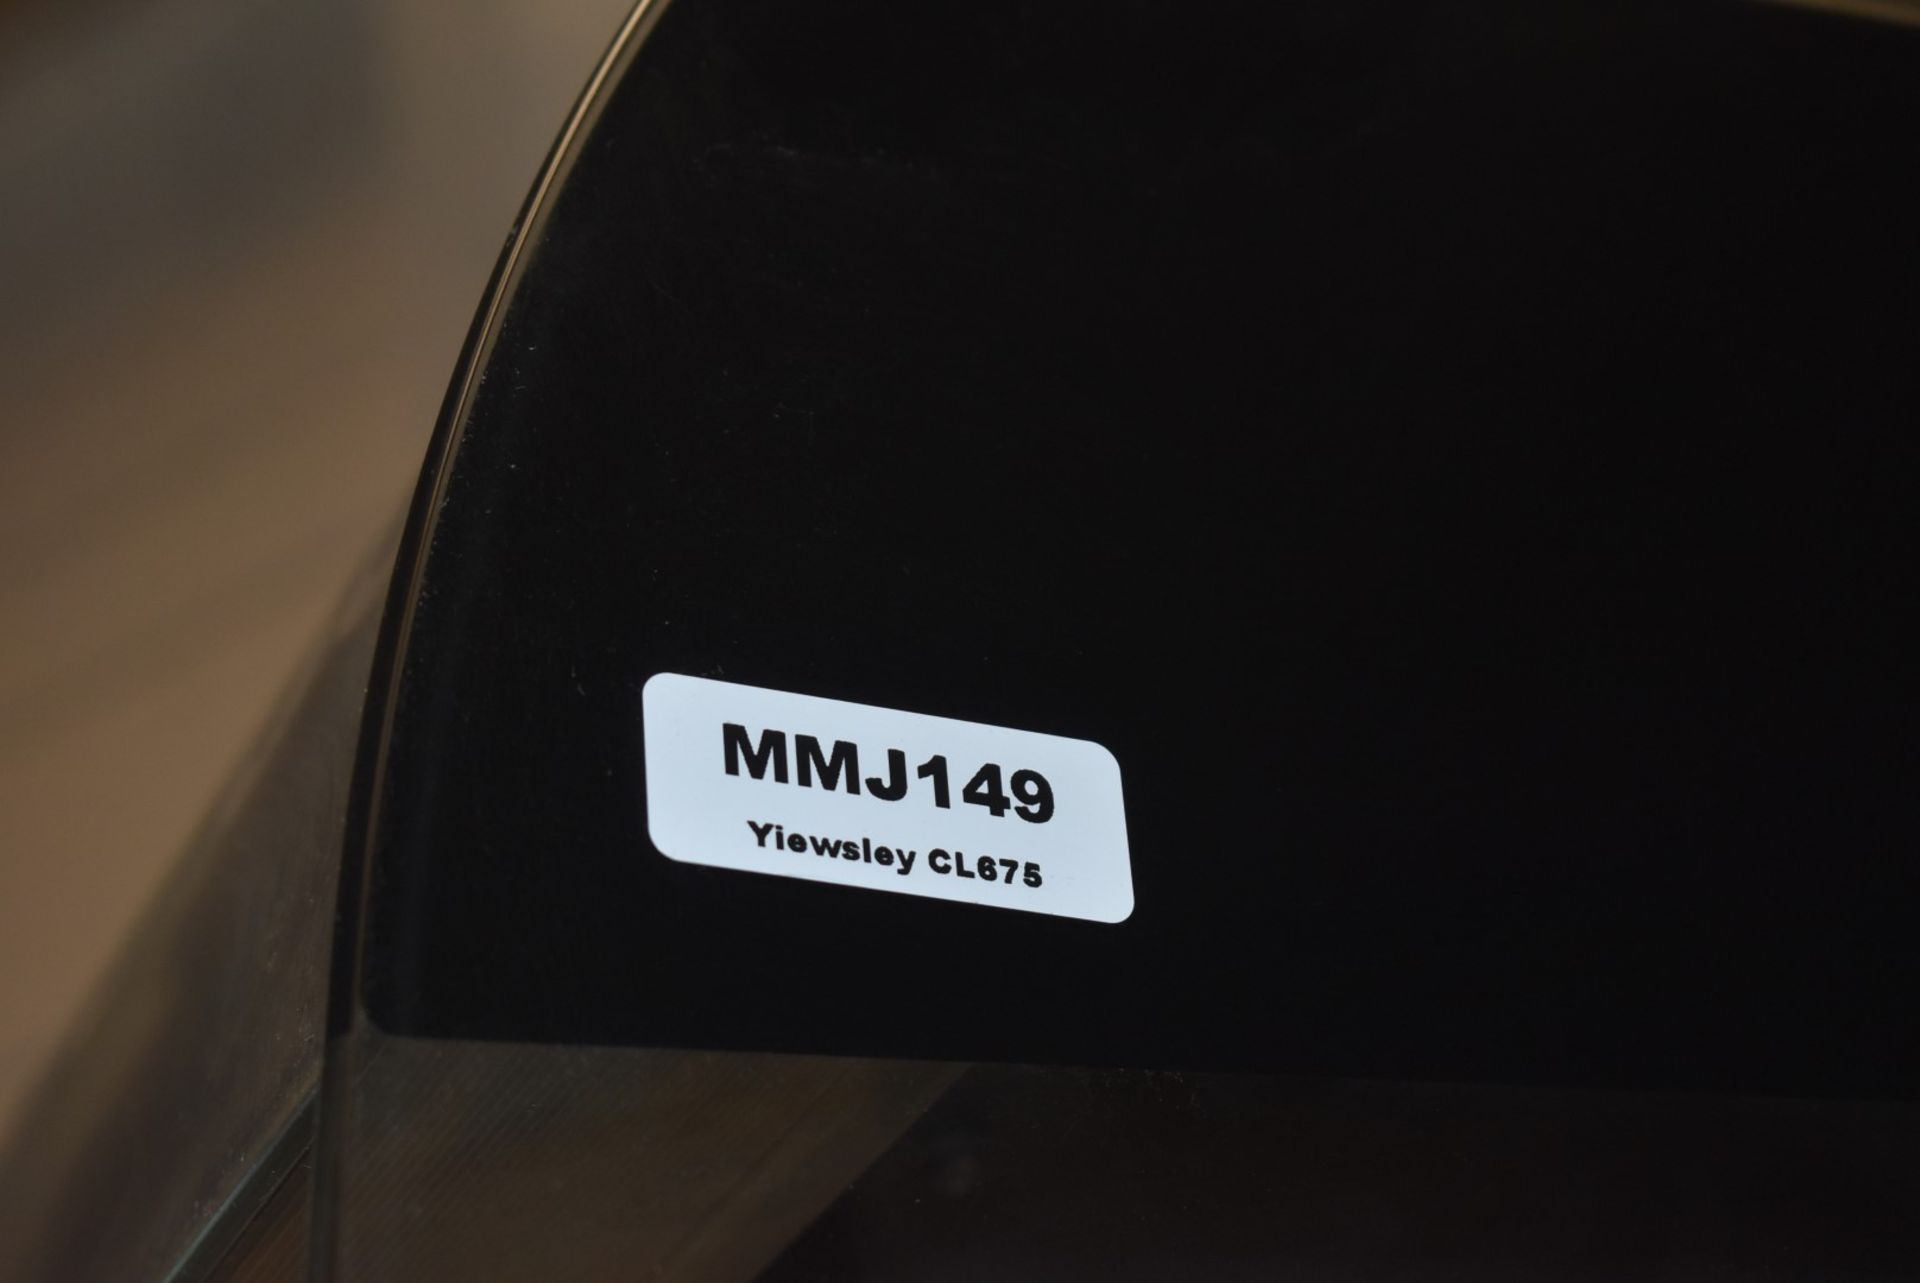 1 x Fri-Jado Four Tier Multi Deck Hot Food Warmer Heated Display Unit - Model MD60-5 SB - - Image 11 of 11